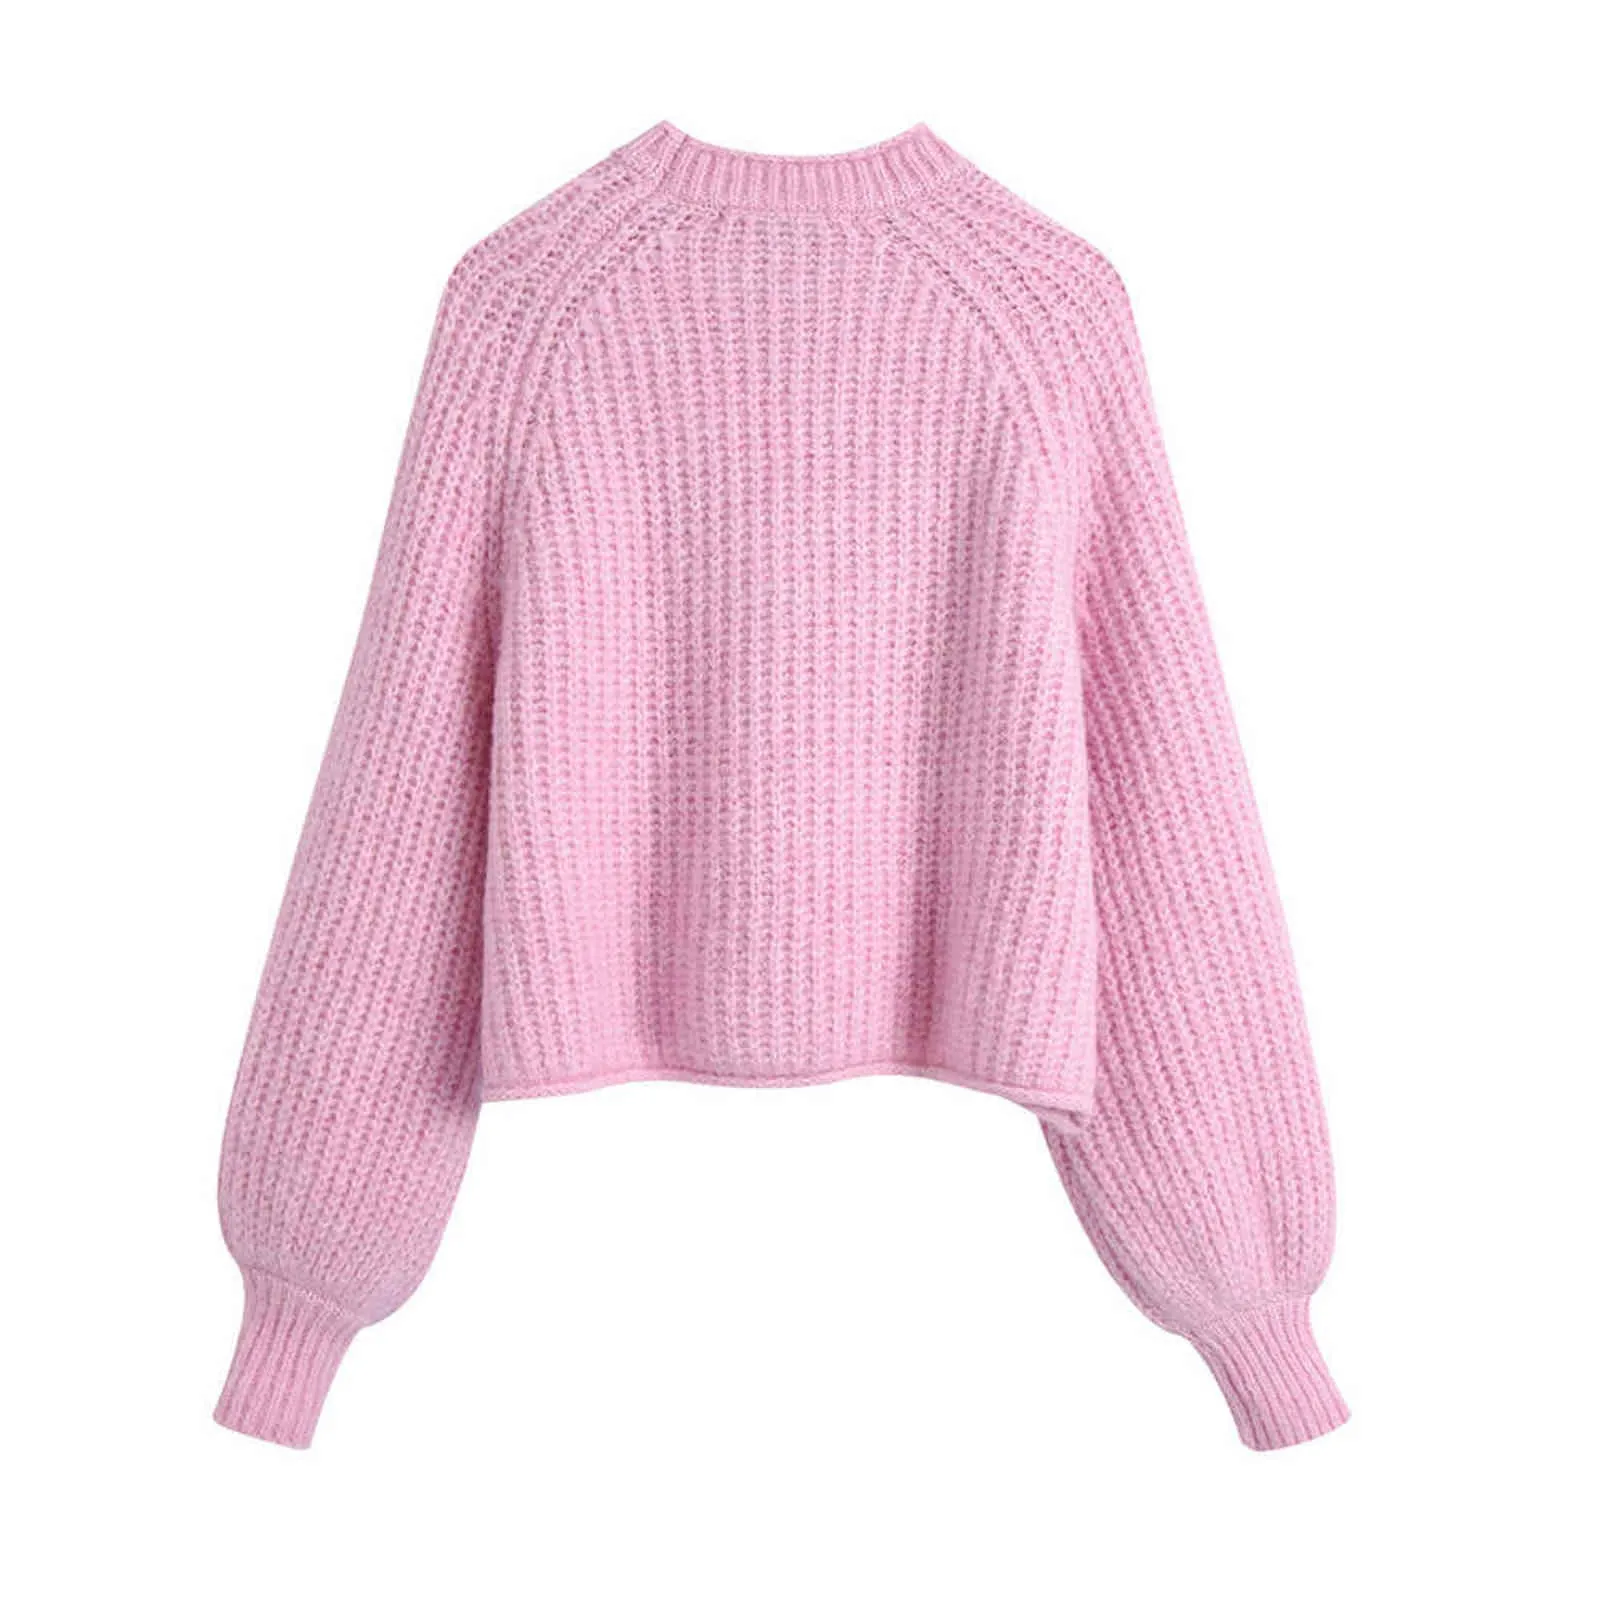 Blsqr roze elegante truien vrouwen o-hals vintage chic pullover tops vrouwelijke streetwear casual crop tops office lady y1110